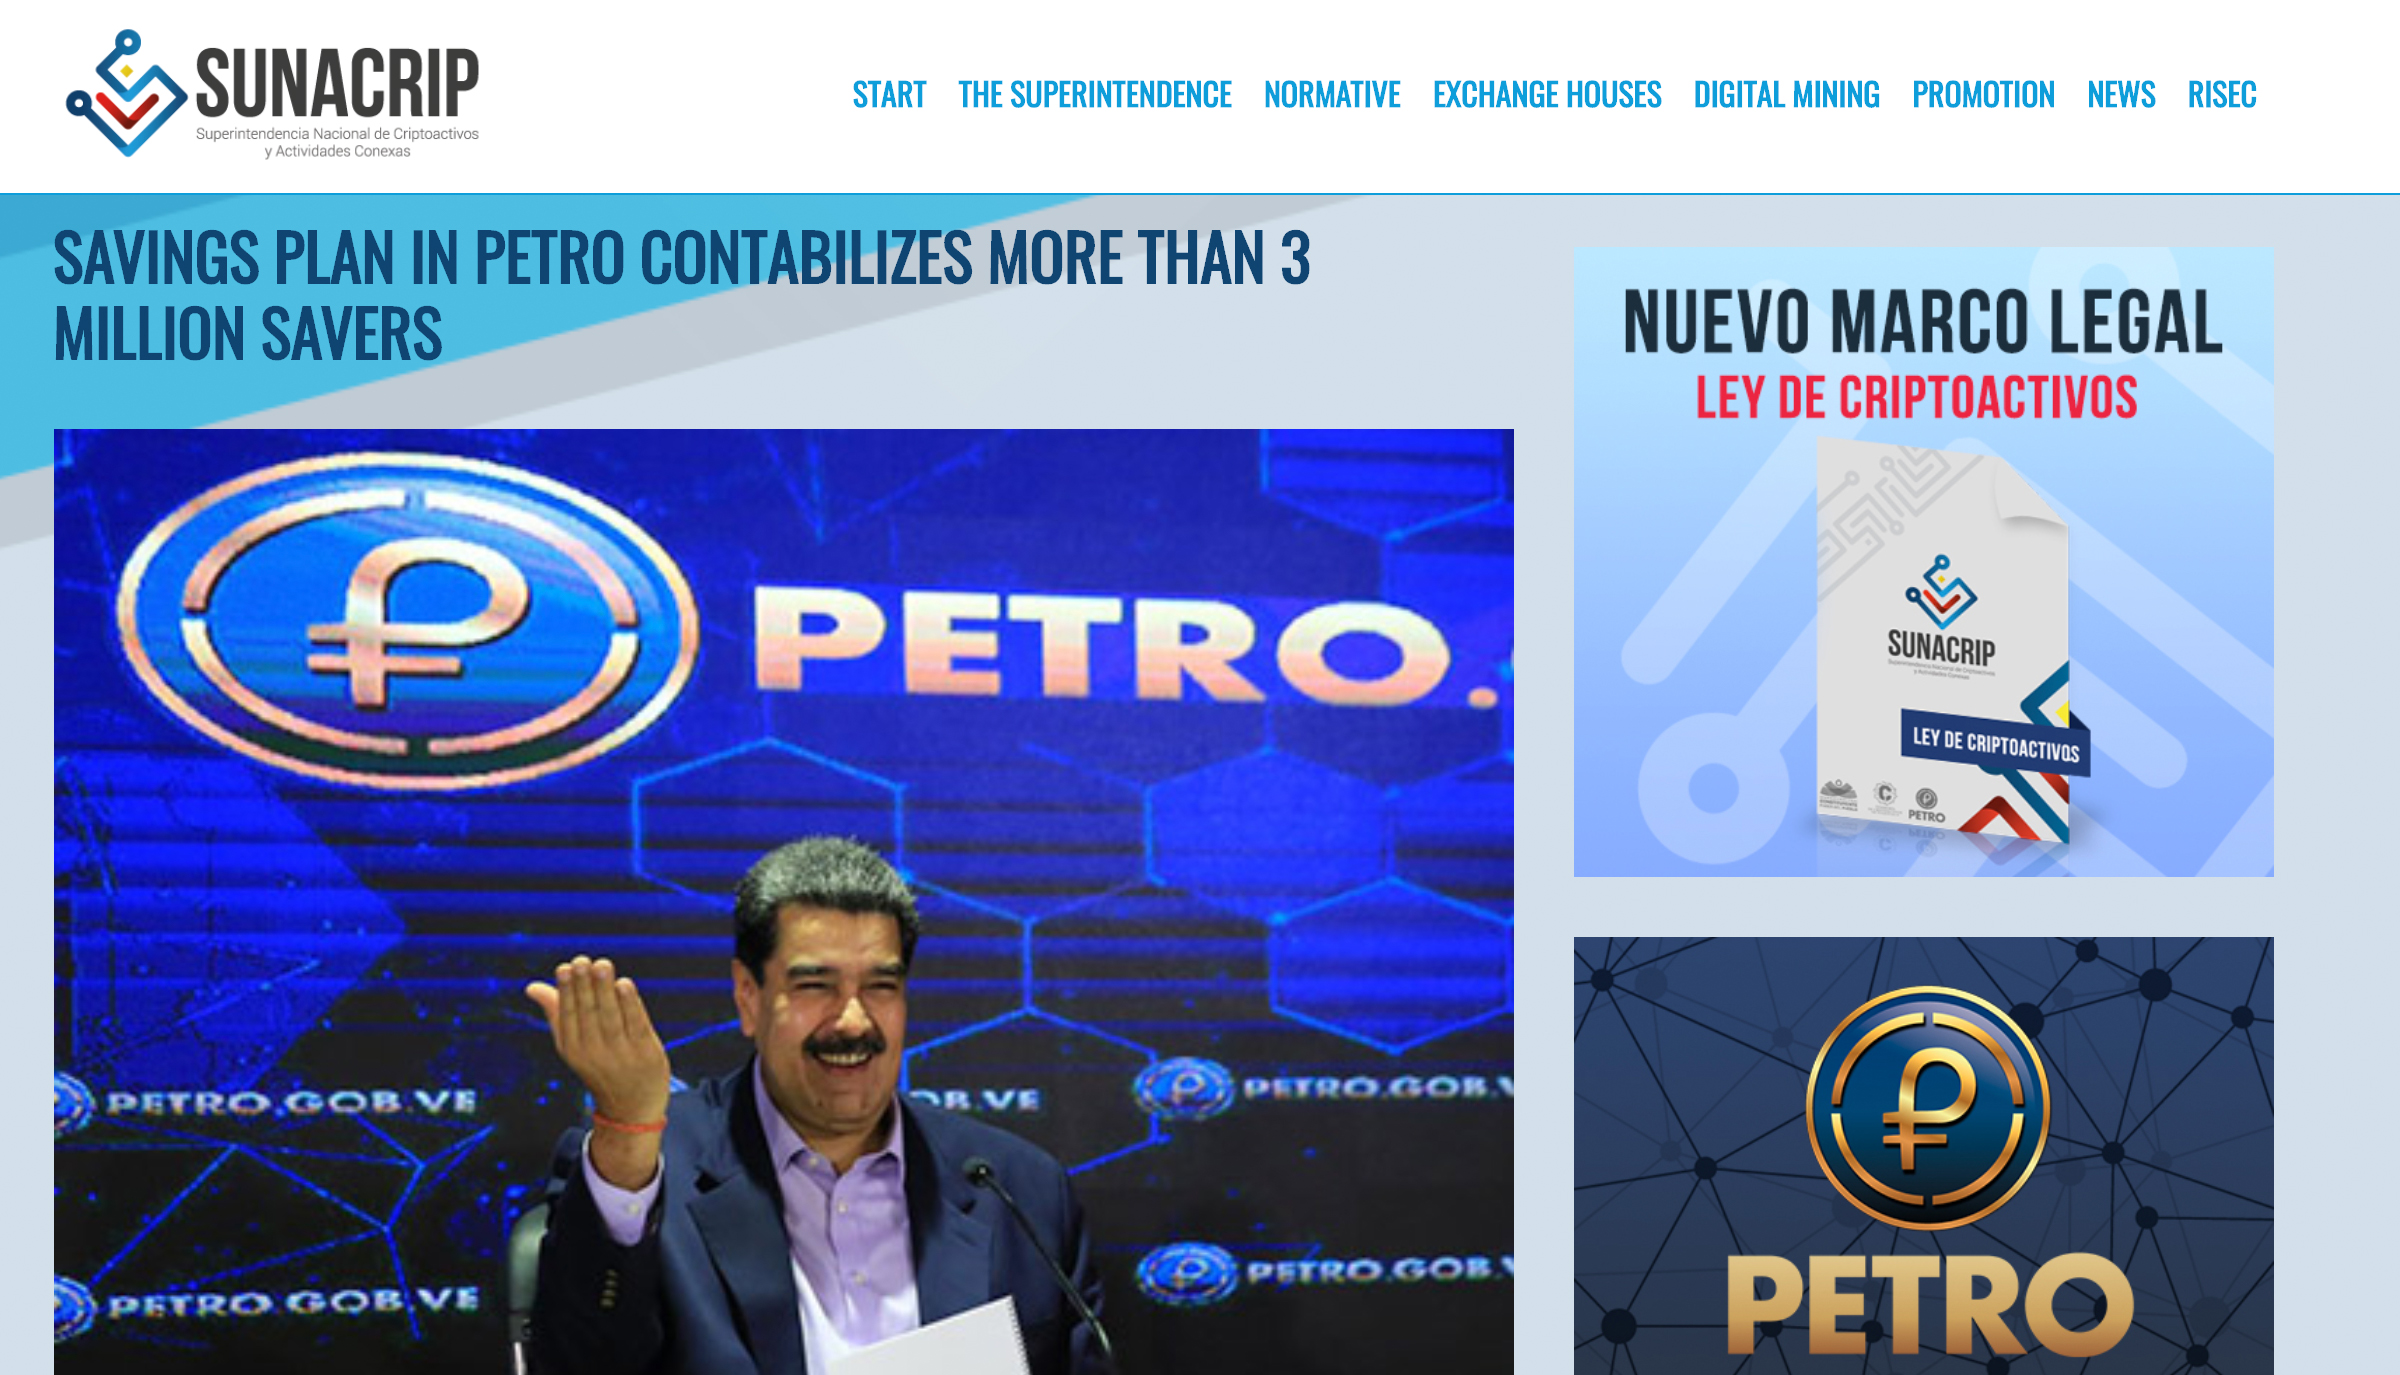 Maduro Plans to Give Venezuelan Pensioners Petro as Christmas Bonus